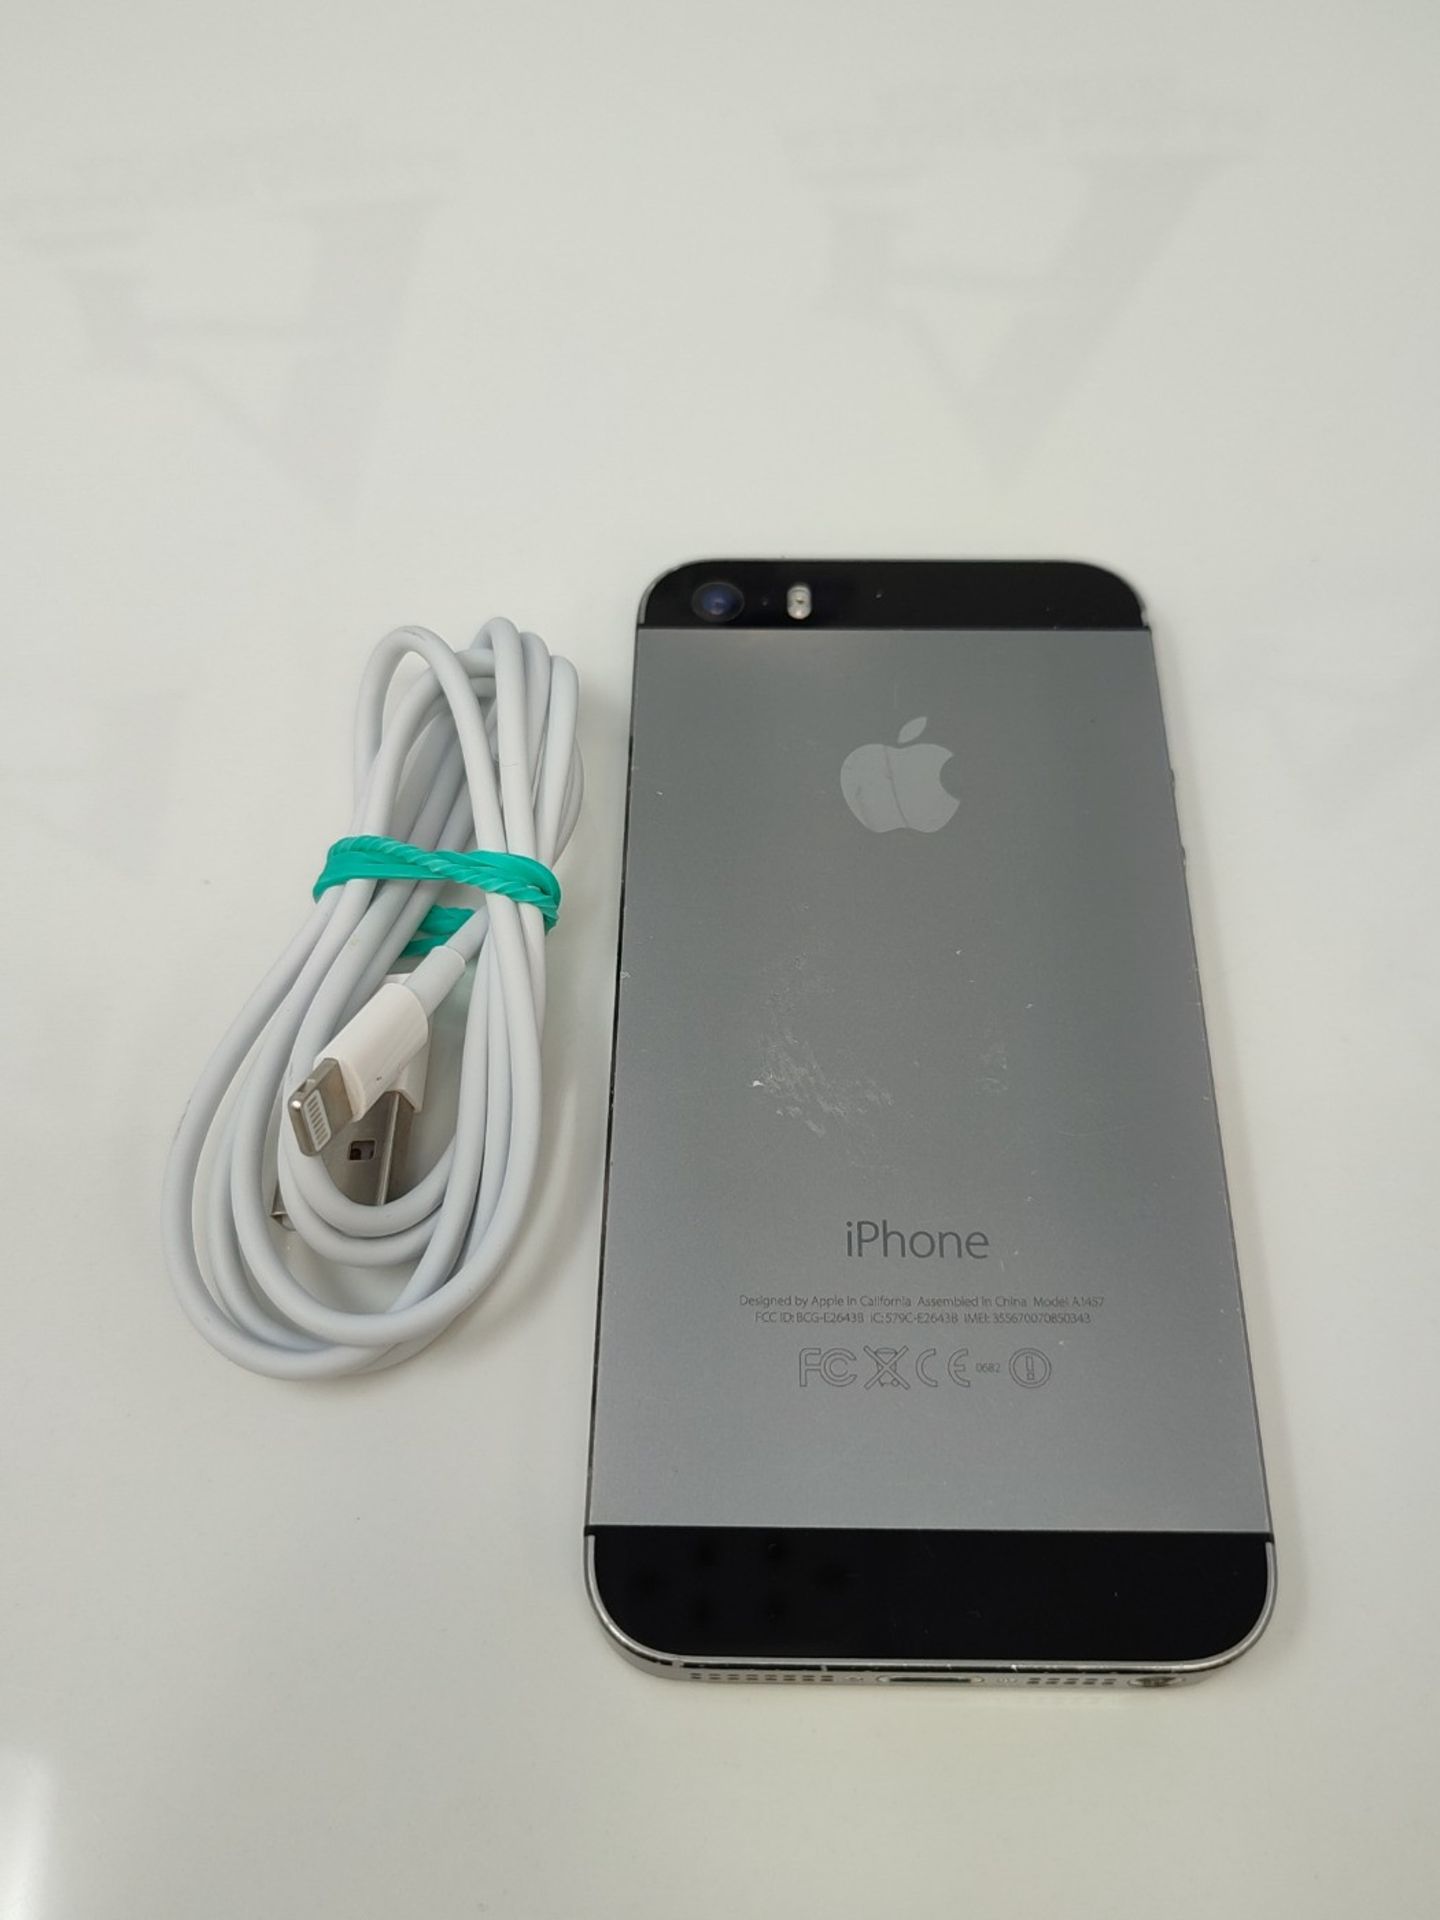 Apple iPhone 5s Gray, 16GB - Image 2 of 2